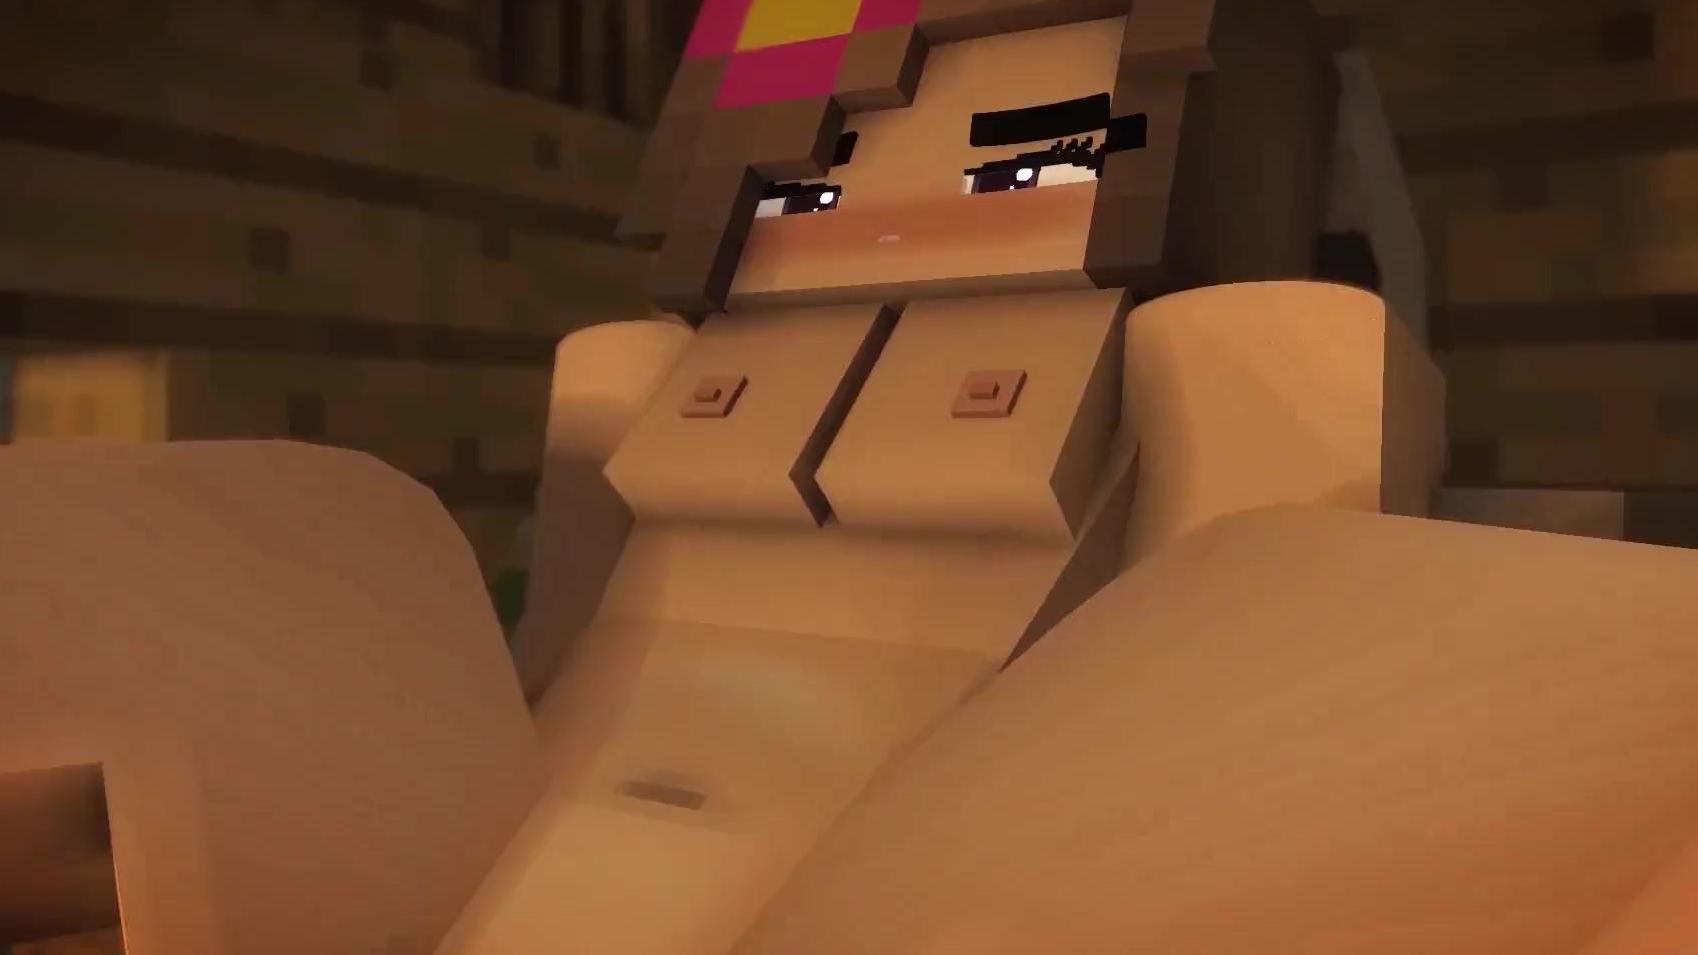 Minecraft-alike sex animation photo picture